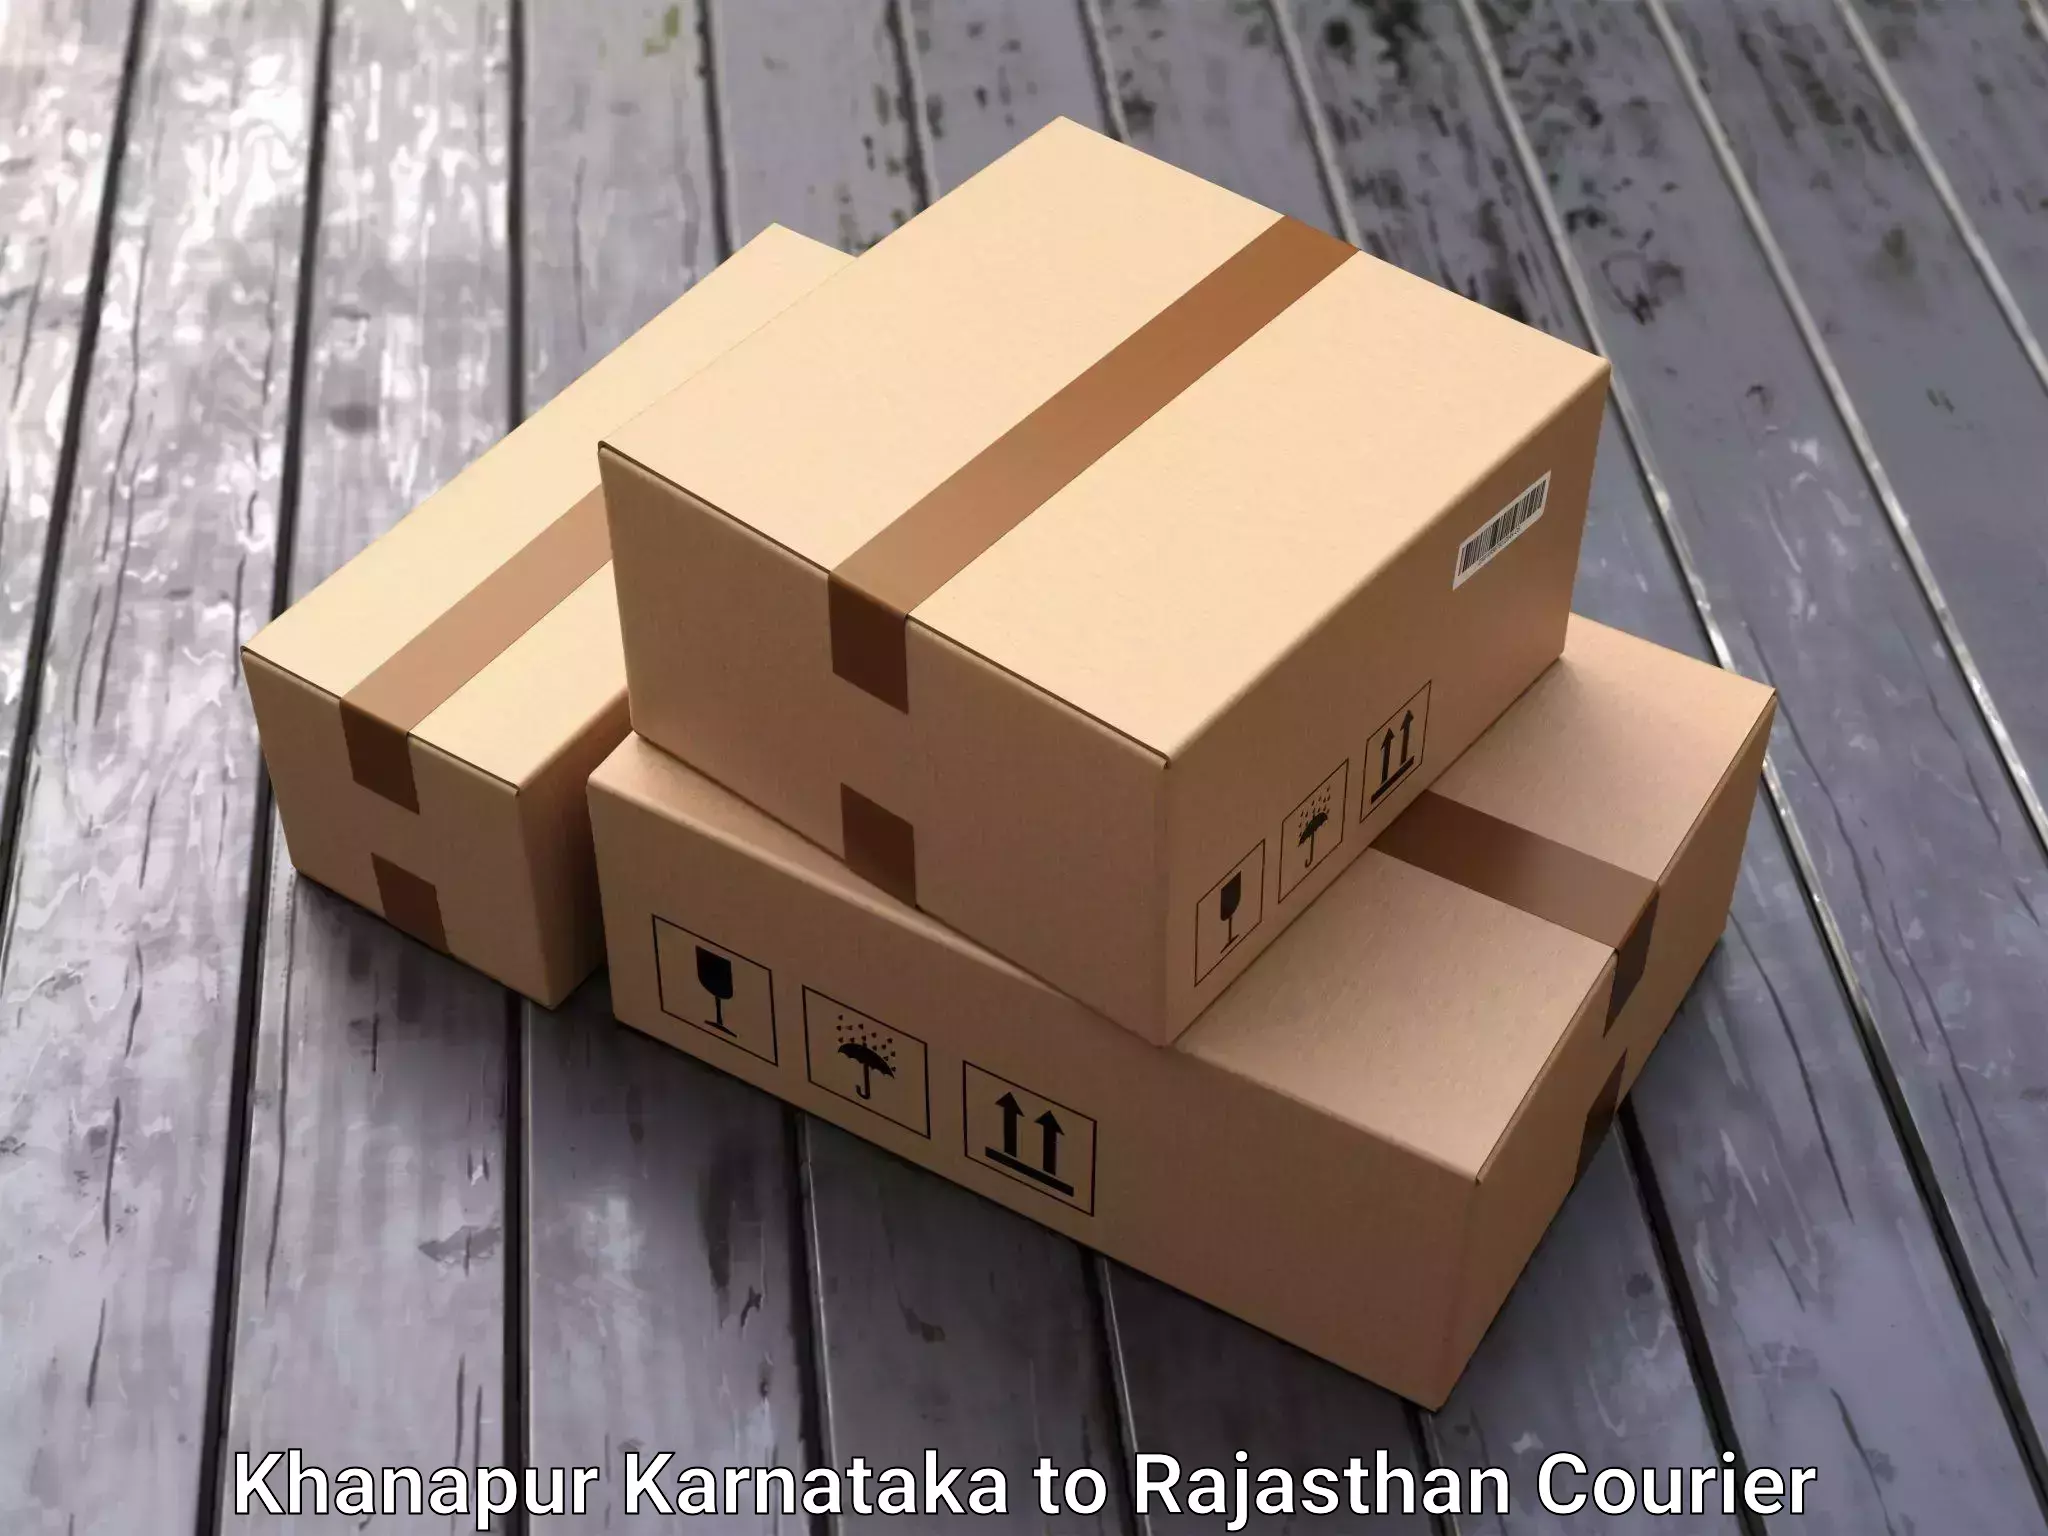 Reliable movers Khanapur Karnataka to Rajasthan